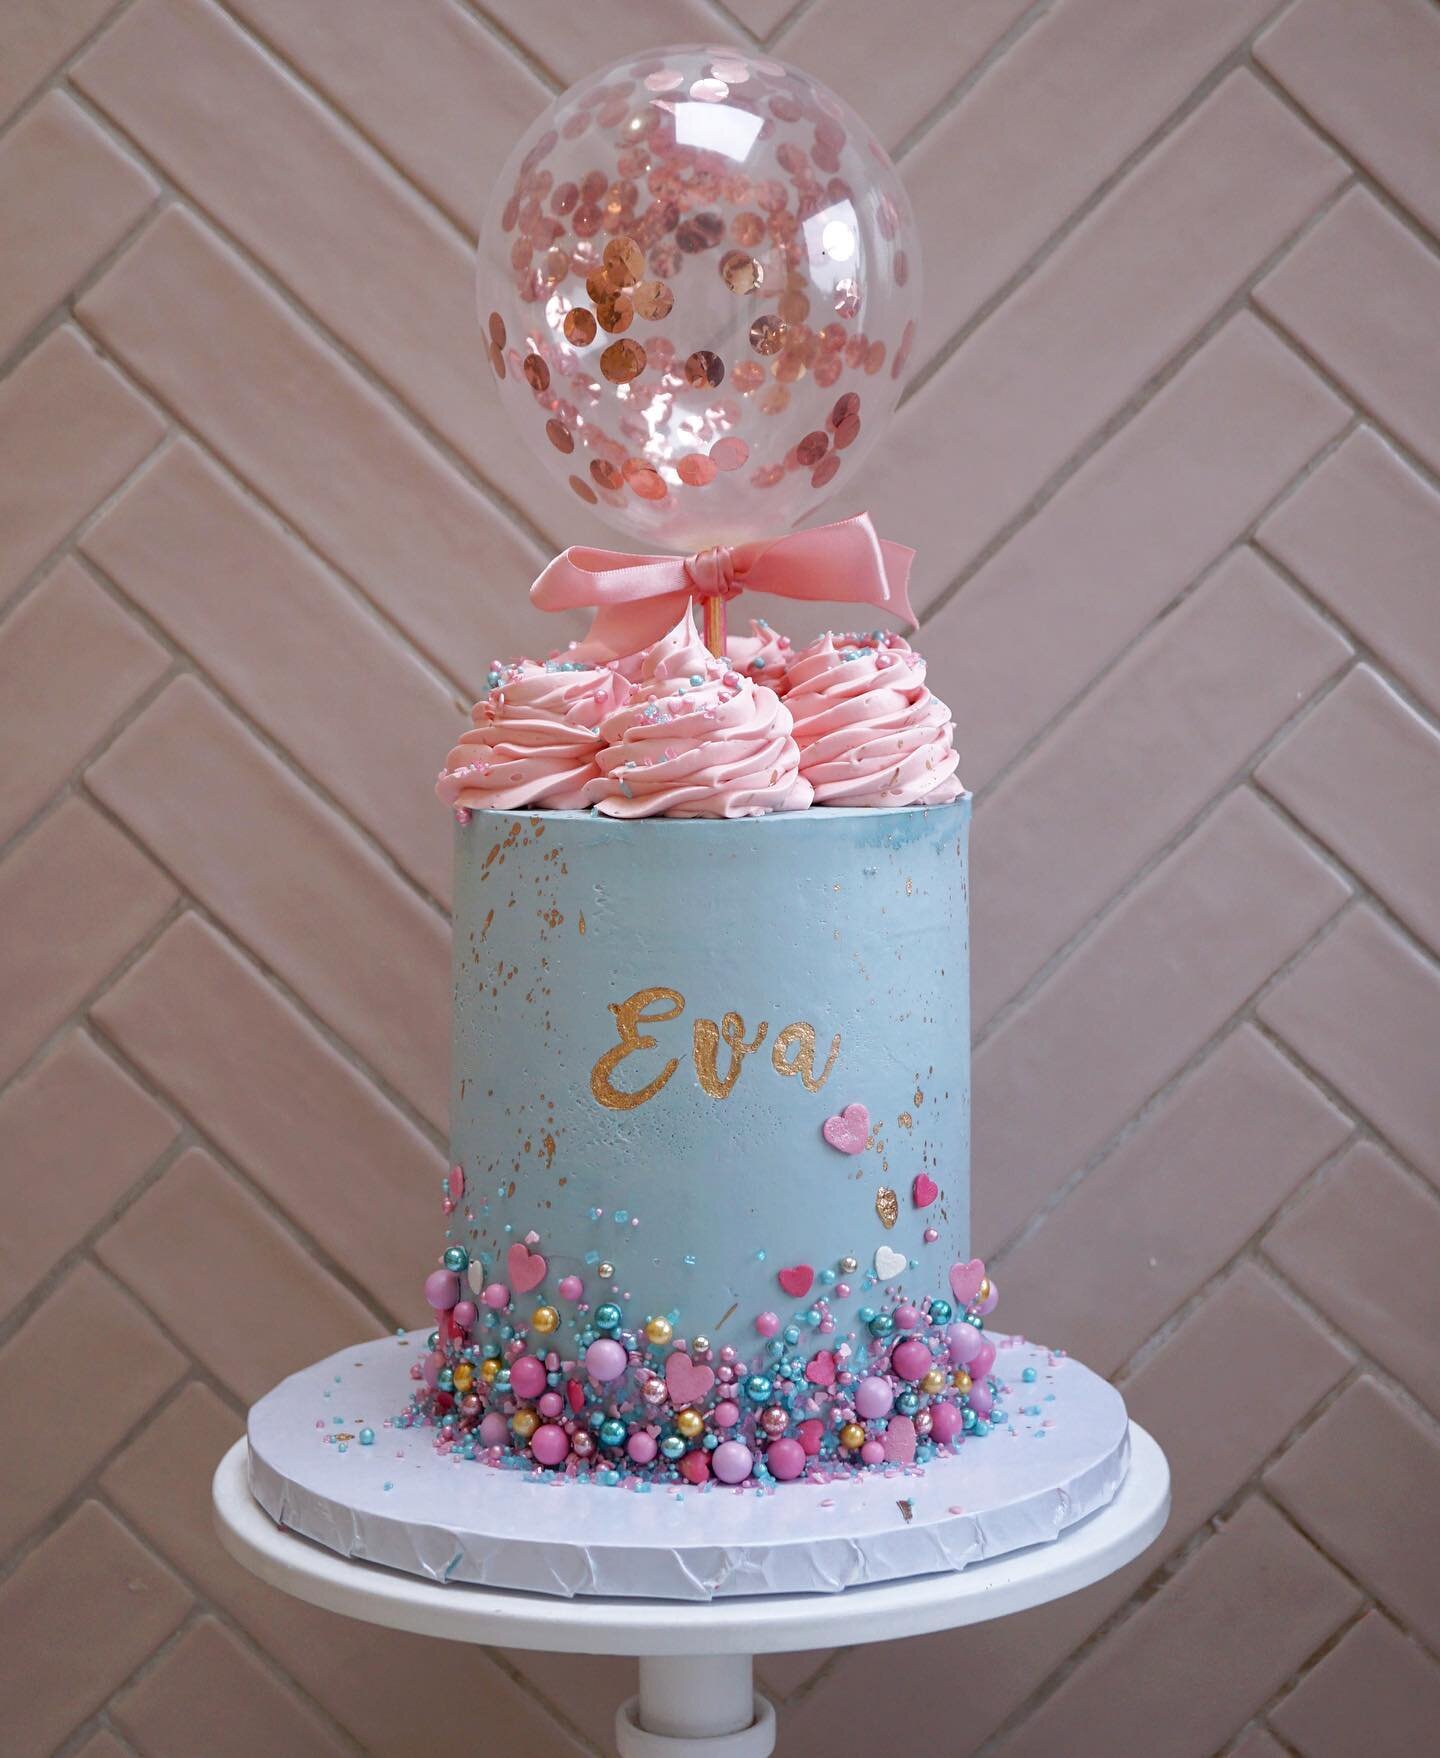 SPRINKLE CAKE 💗
This is one of my favourite cakes to make - super sweet and sprinkles for days. 

birthdaycake #pastelcake #pinkcake #buttercream #dripcake #cake #cakemaker #cakedecorating #instacake #instacakes #baker #bake #girlscake #buttercreamc